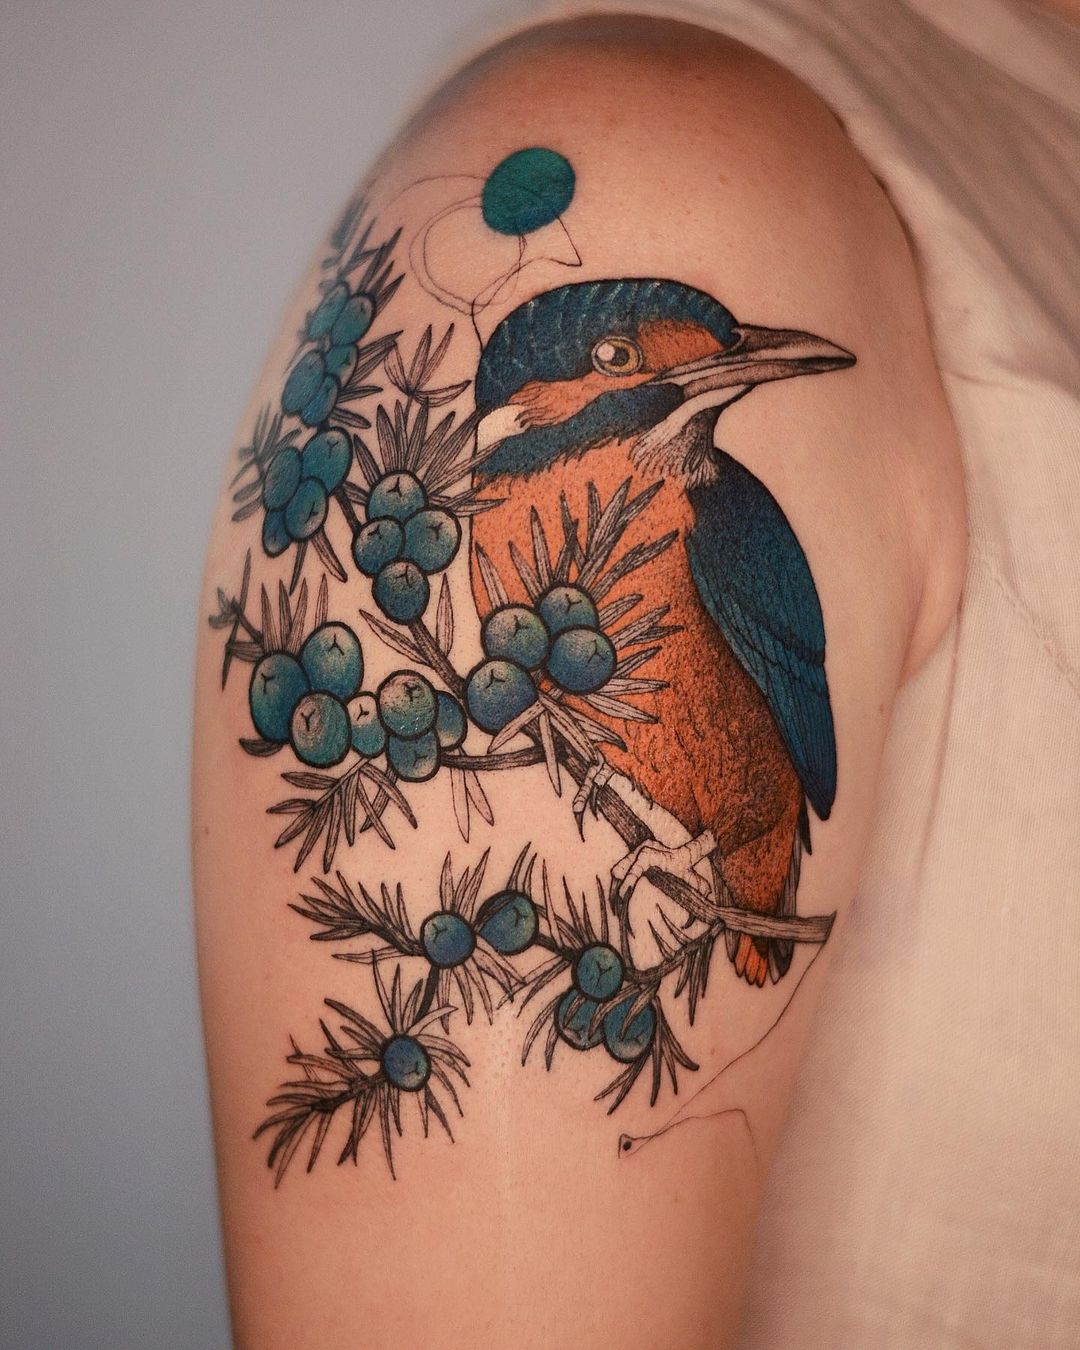 Sztuka tatuażu inspirowana naturą autorstwa Dzo Lamka